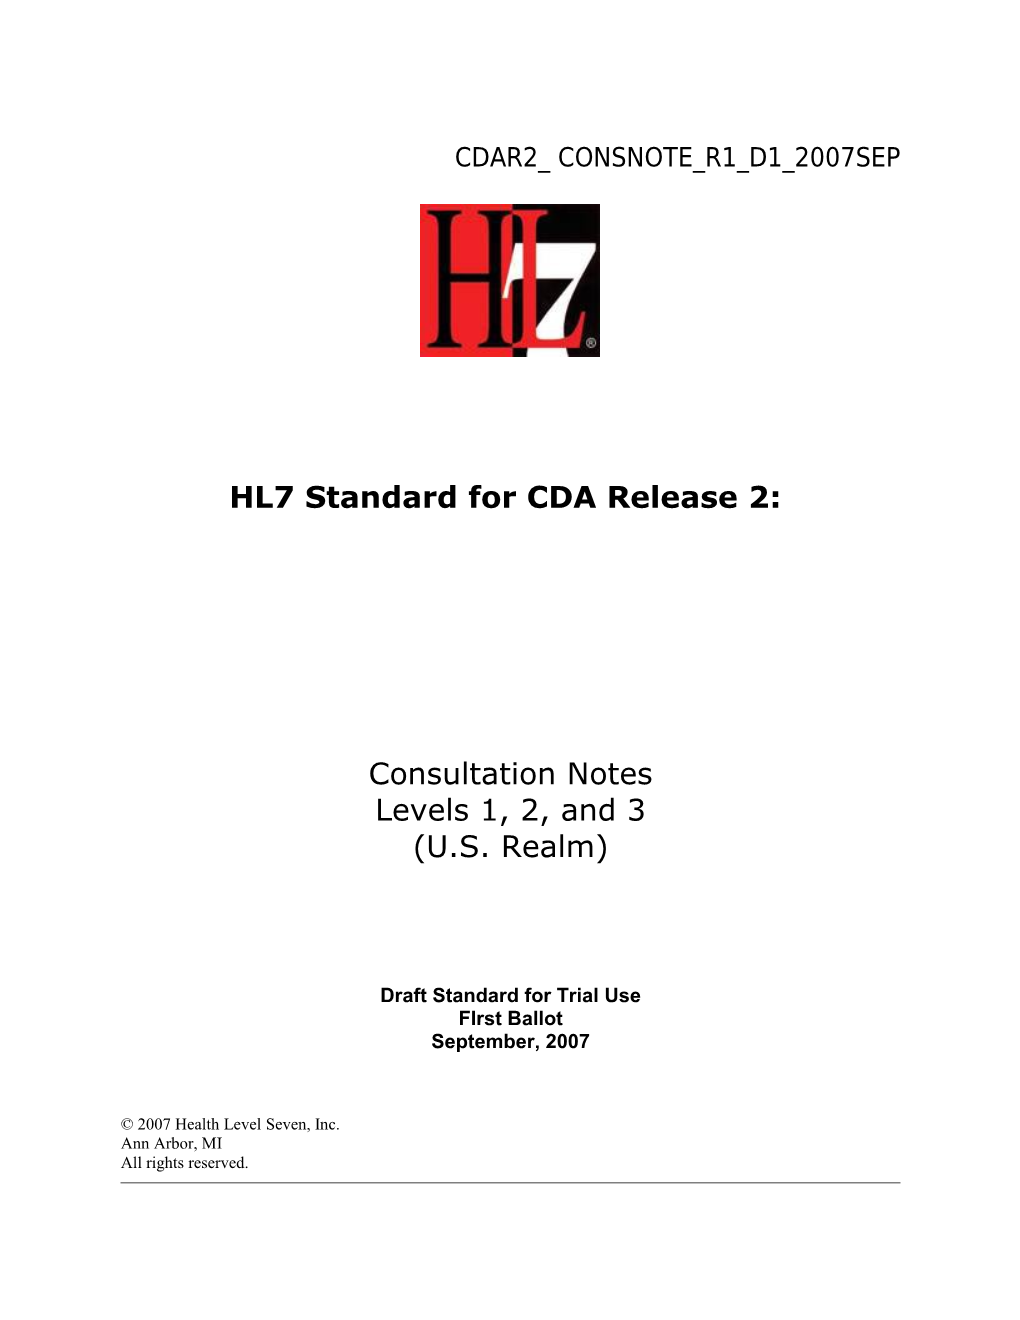 HL7 Standard for CDA Release 2